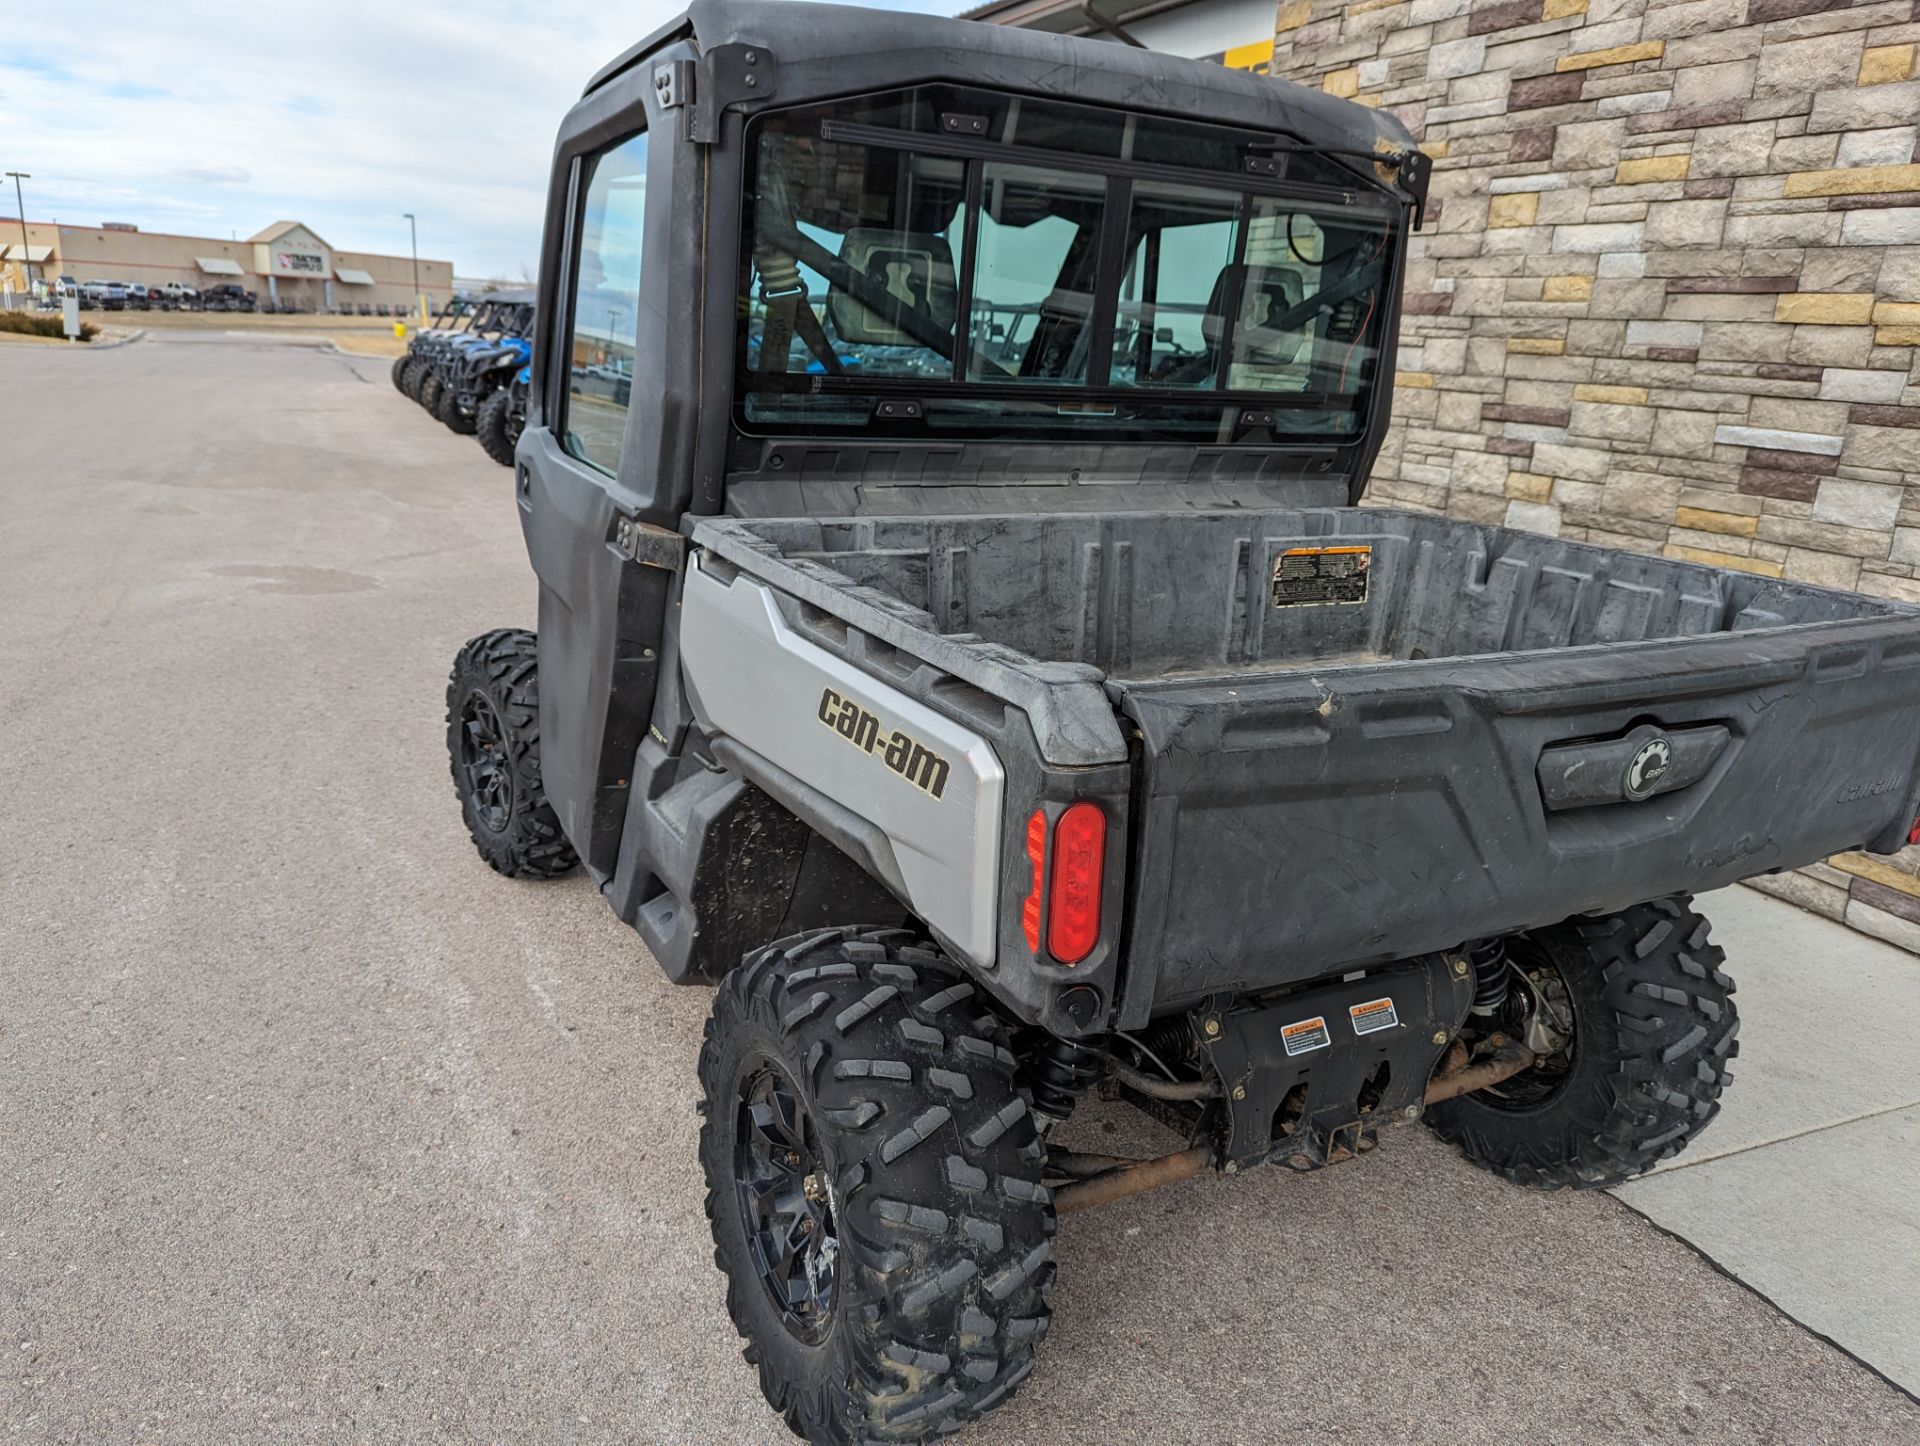 2019 Can-Am Defender XT CAB HD10 in Rapid City, South Dakota - Photo 8